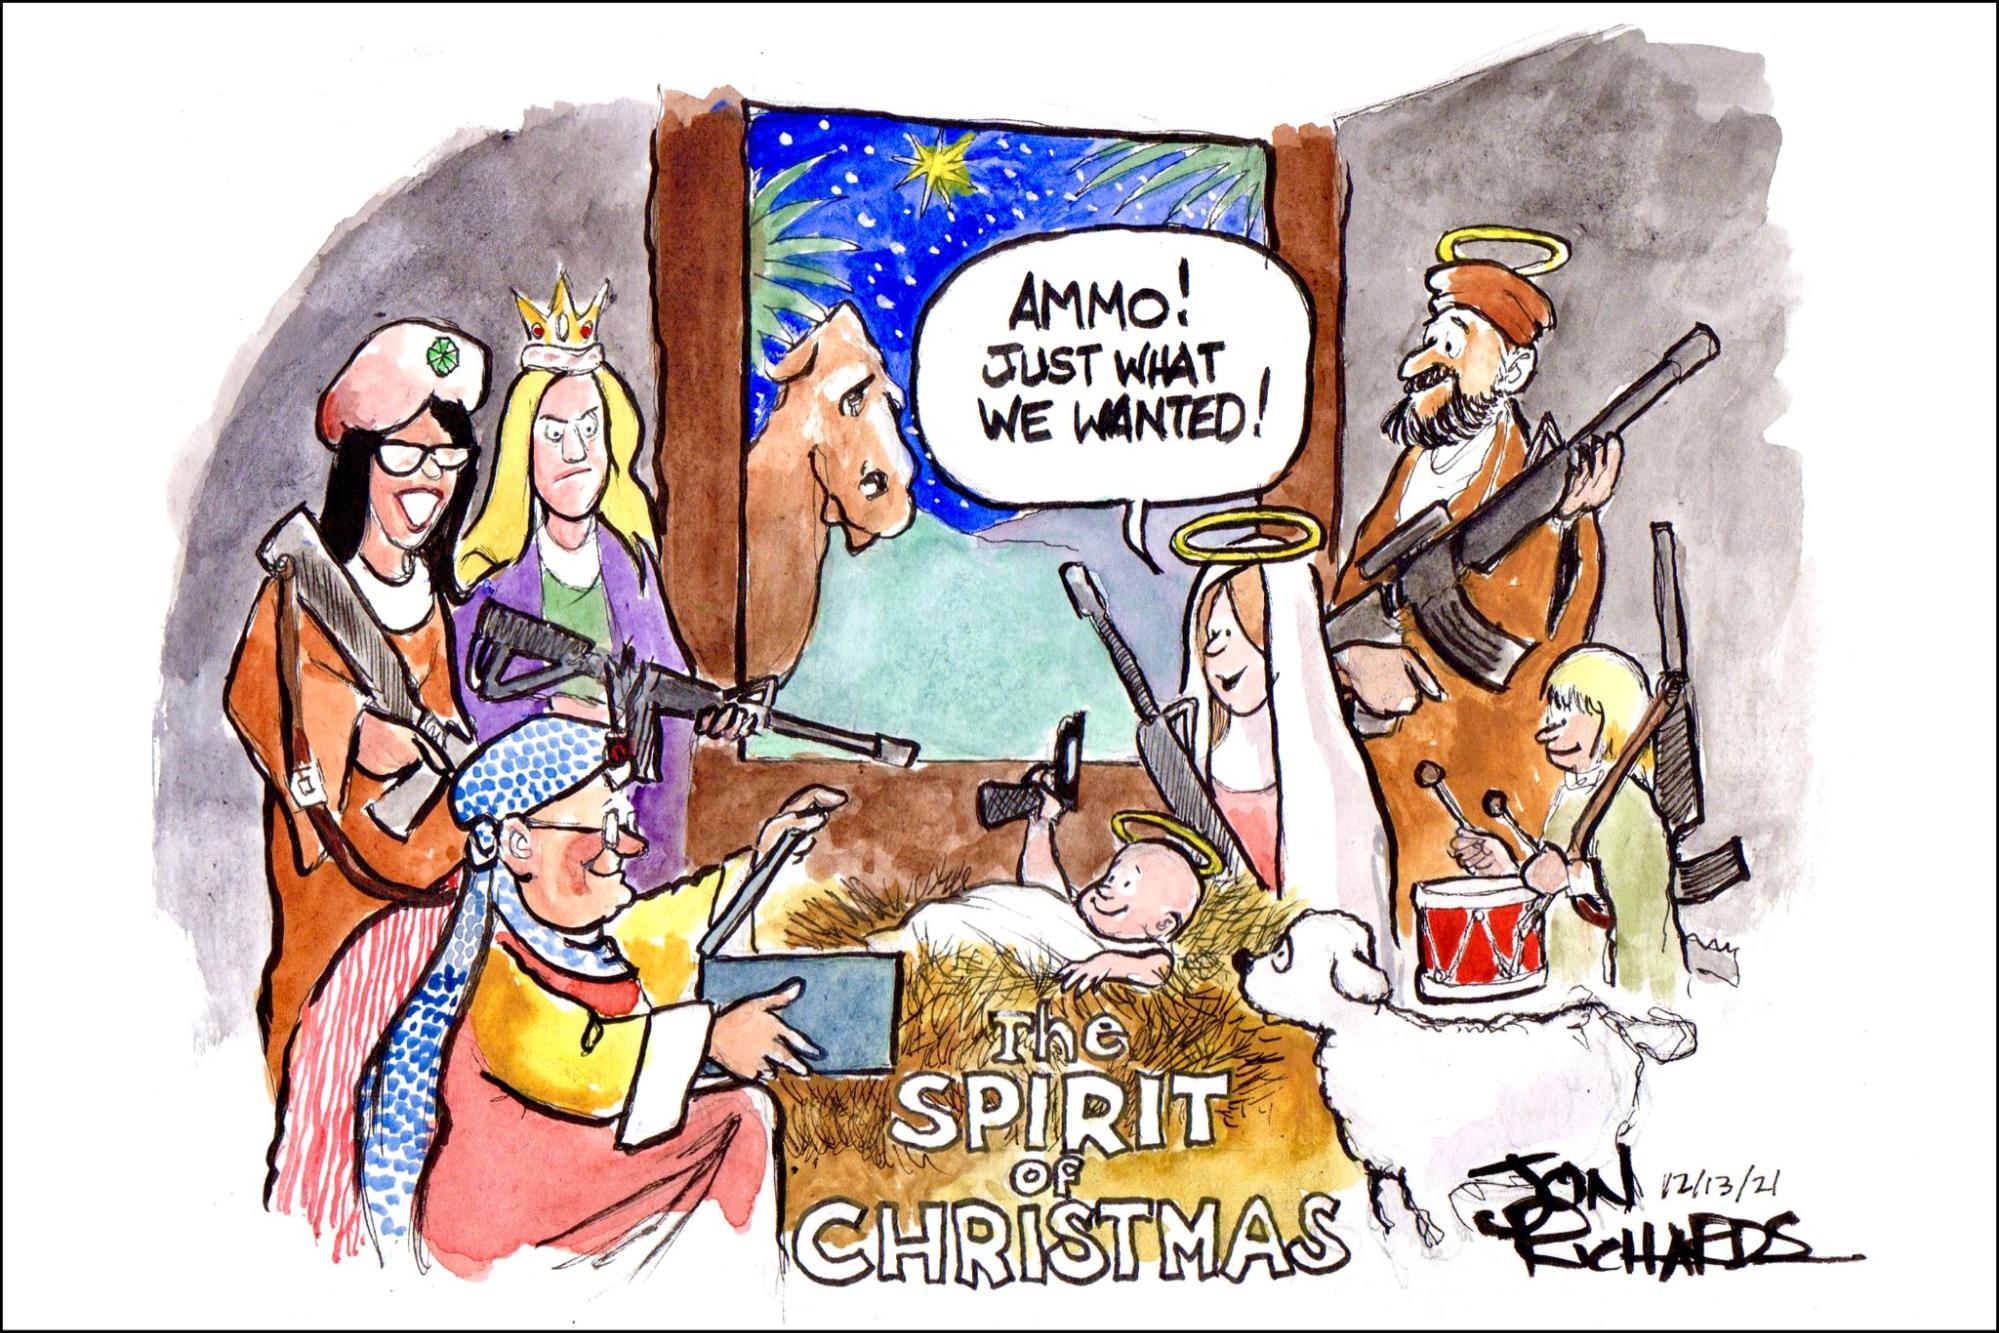 Manger, nativity, Jesus, Joseph, Mary, Wise Men